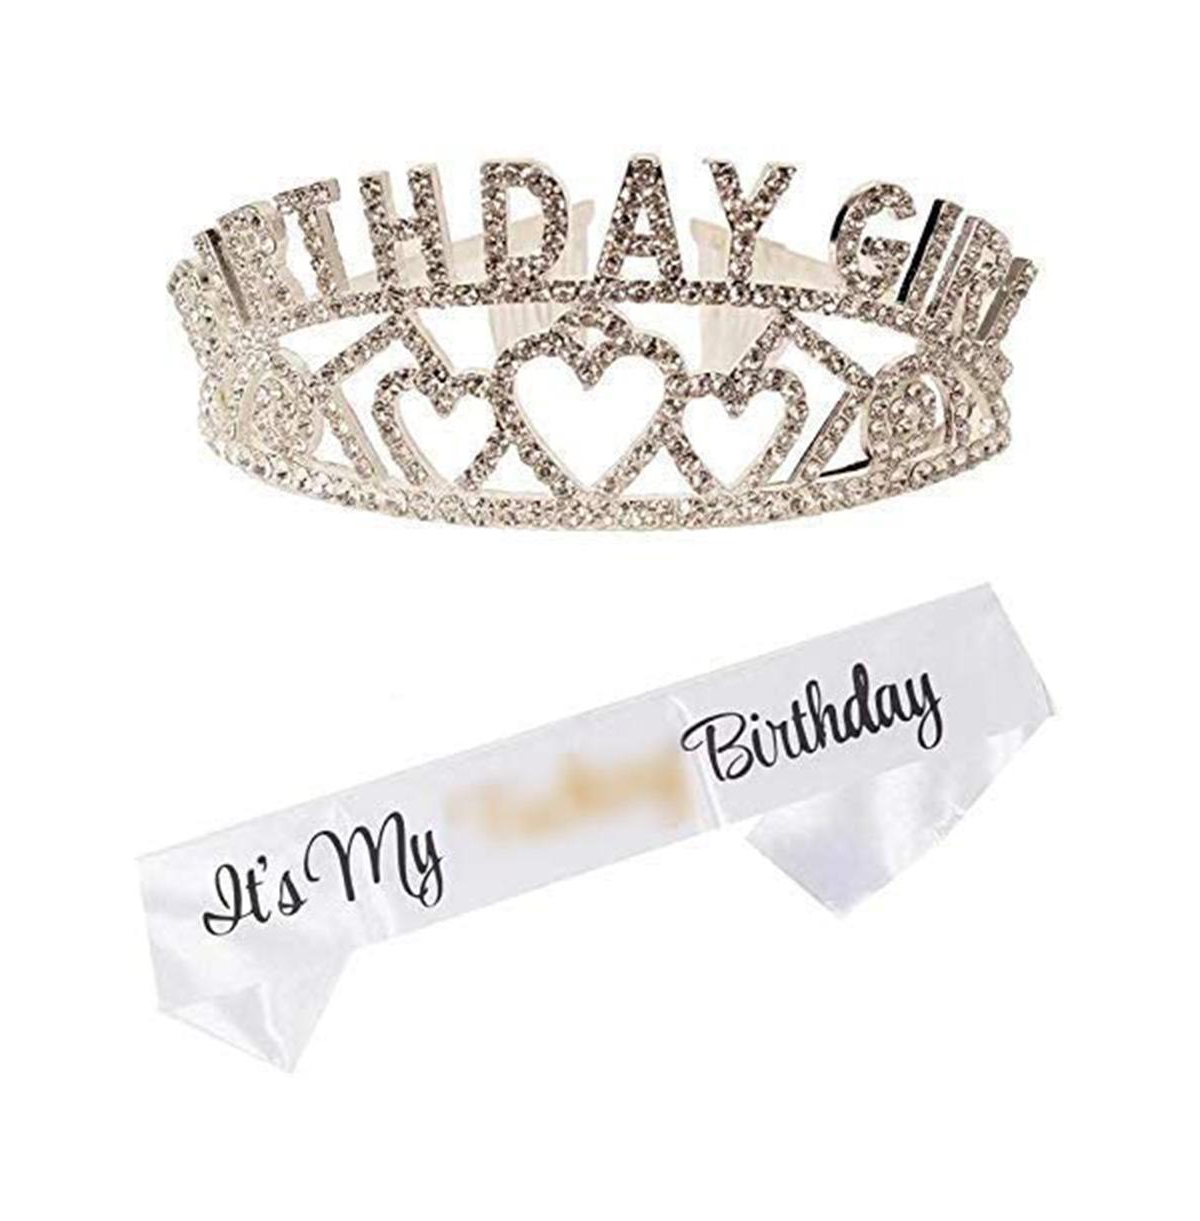 Birthday Sash and Tiara for Women - Glitter Sash and Birthday Girl Rhinestone Silver Metal Tiara, Perfect Party Gifts for Birthday Celebration - Silve